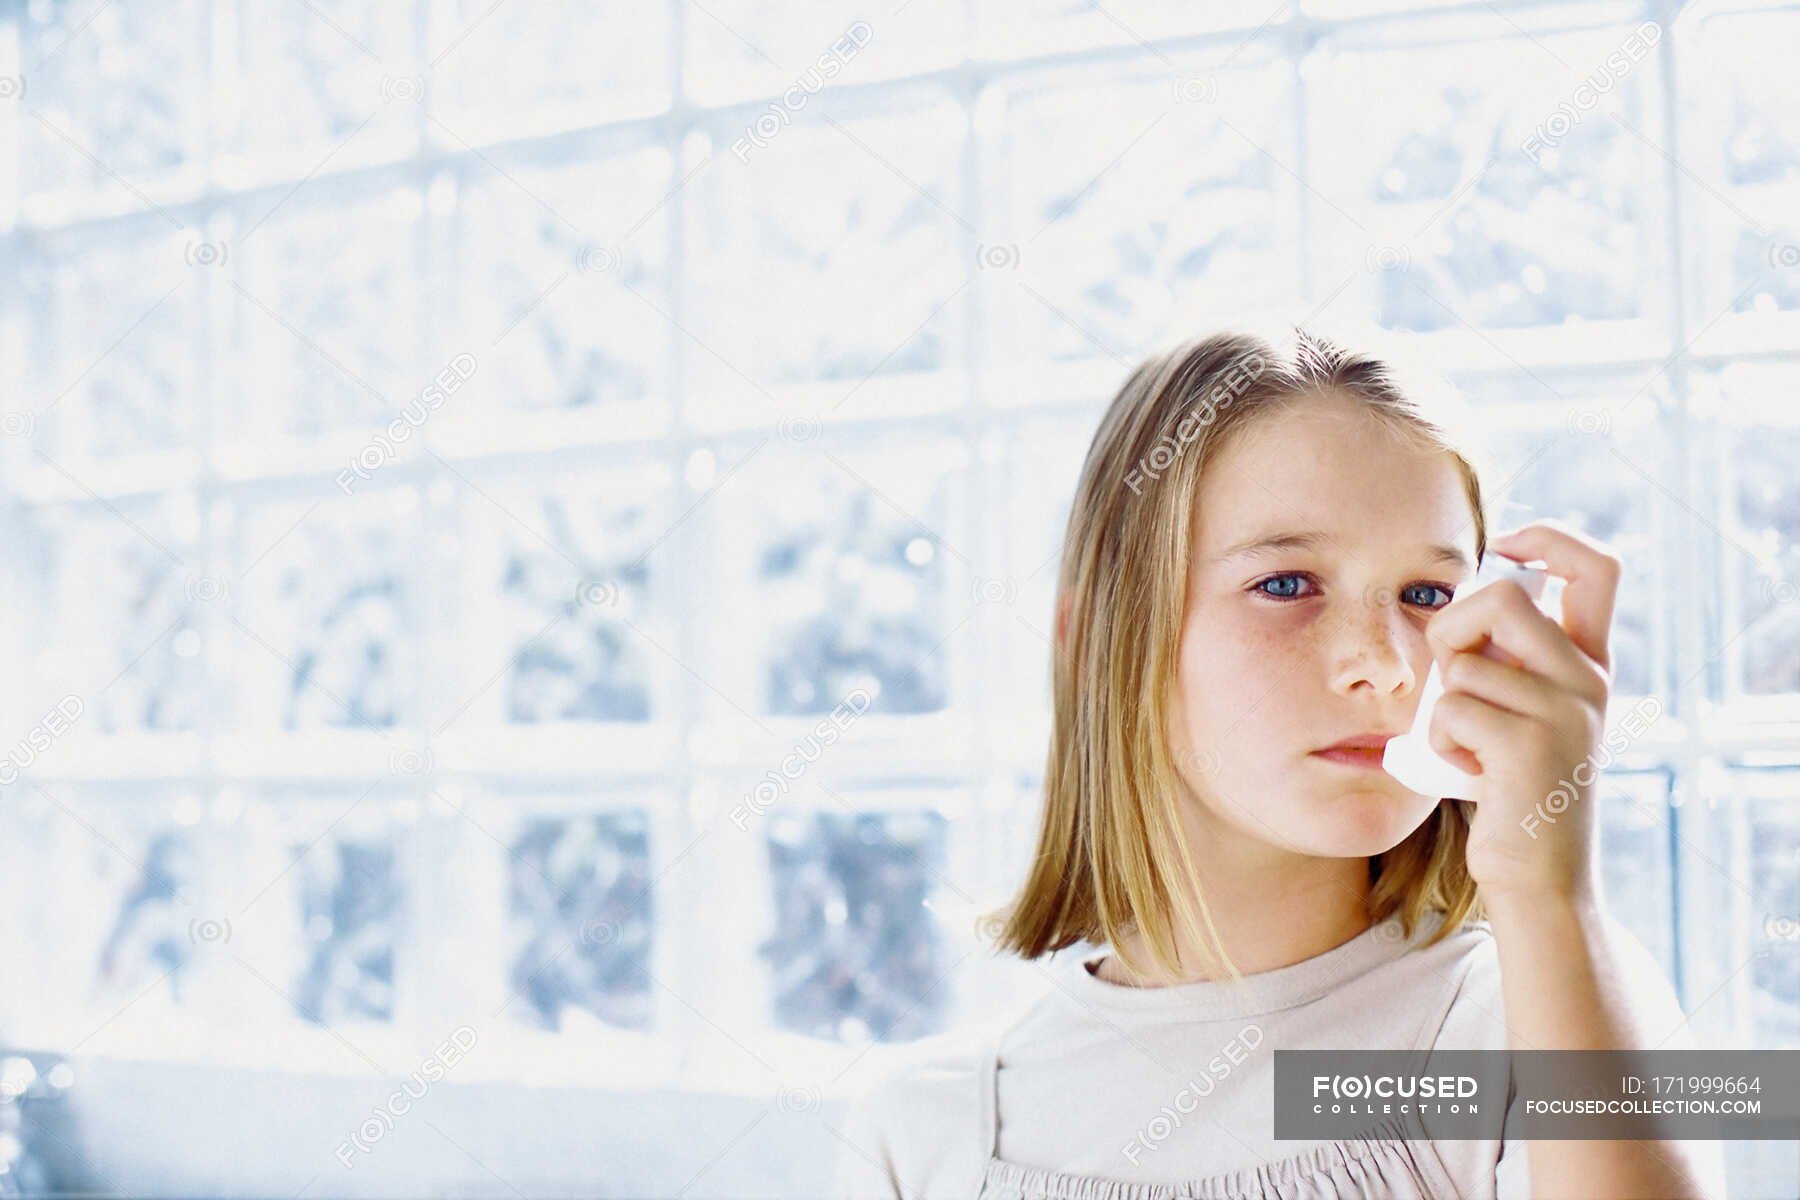 Астма в детстве. Дети астматики. Фото девочки с бронхиальной астмой. Бронхиальная астма клиника у детей арт. Бронхиальная астма у детей клиника картинки.